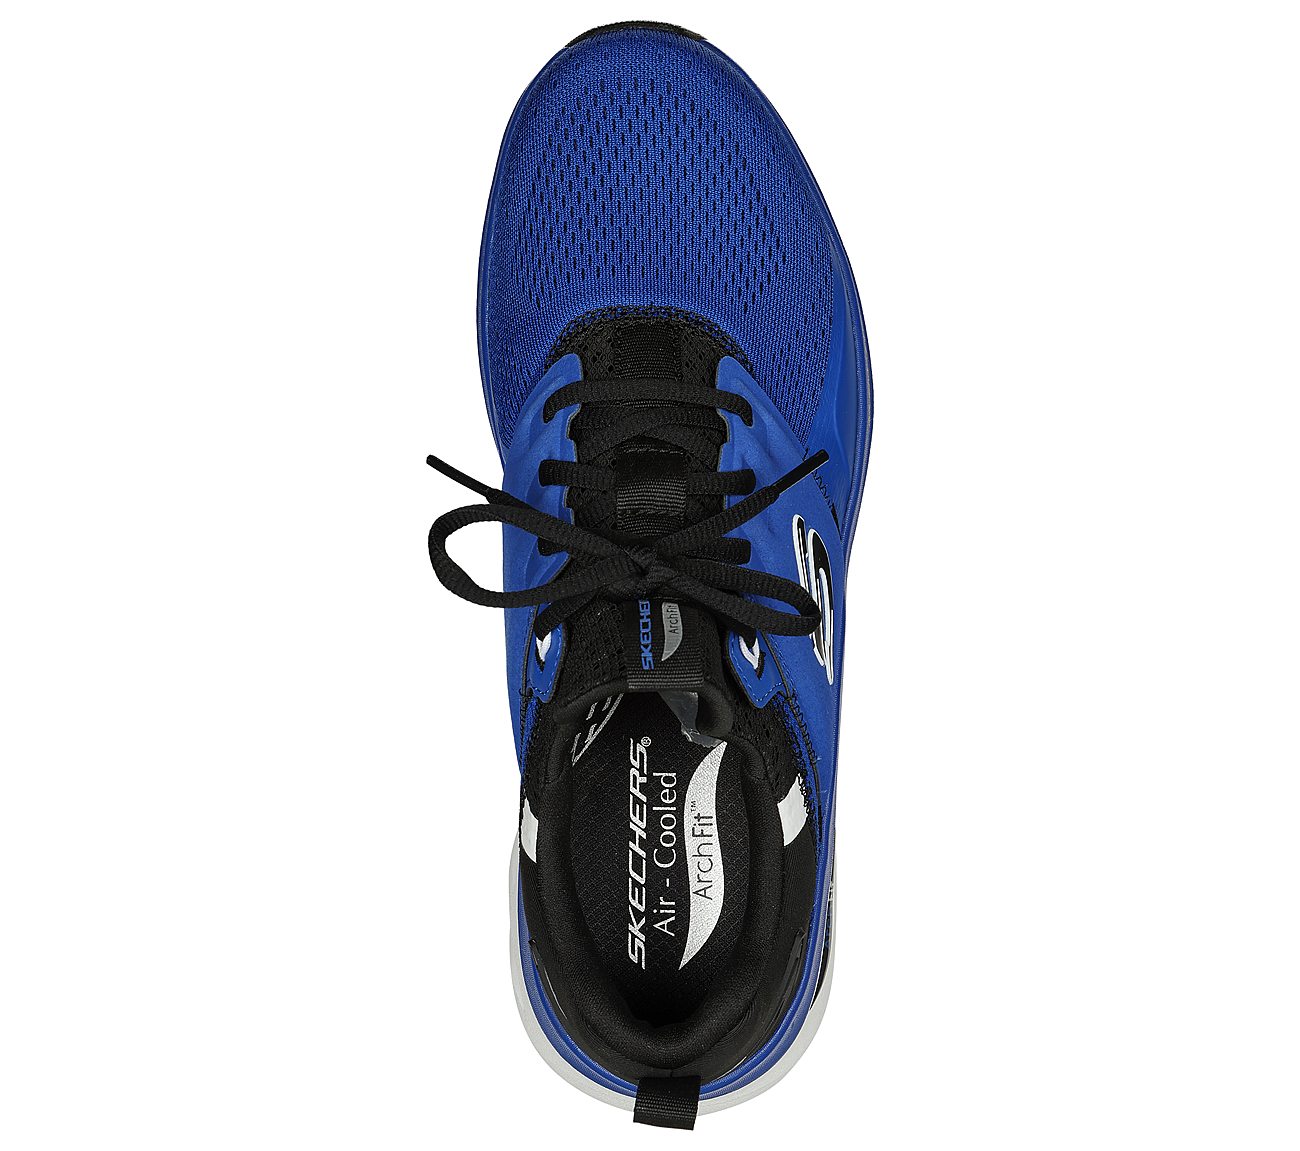 ARCH FIT GLIDE-STEP, BLUE/BLACK Footwear Top View